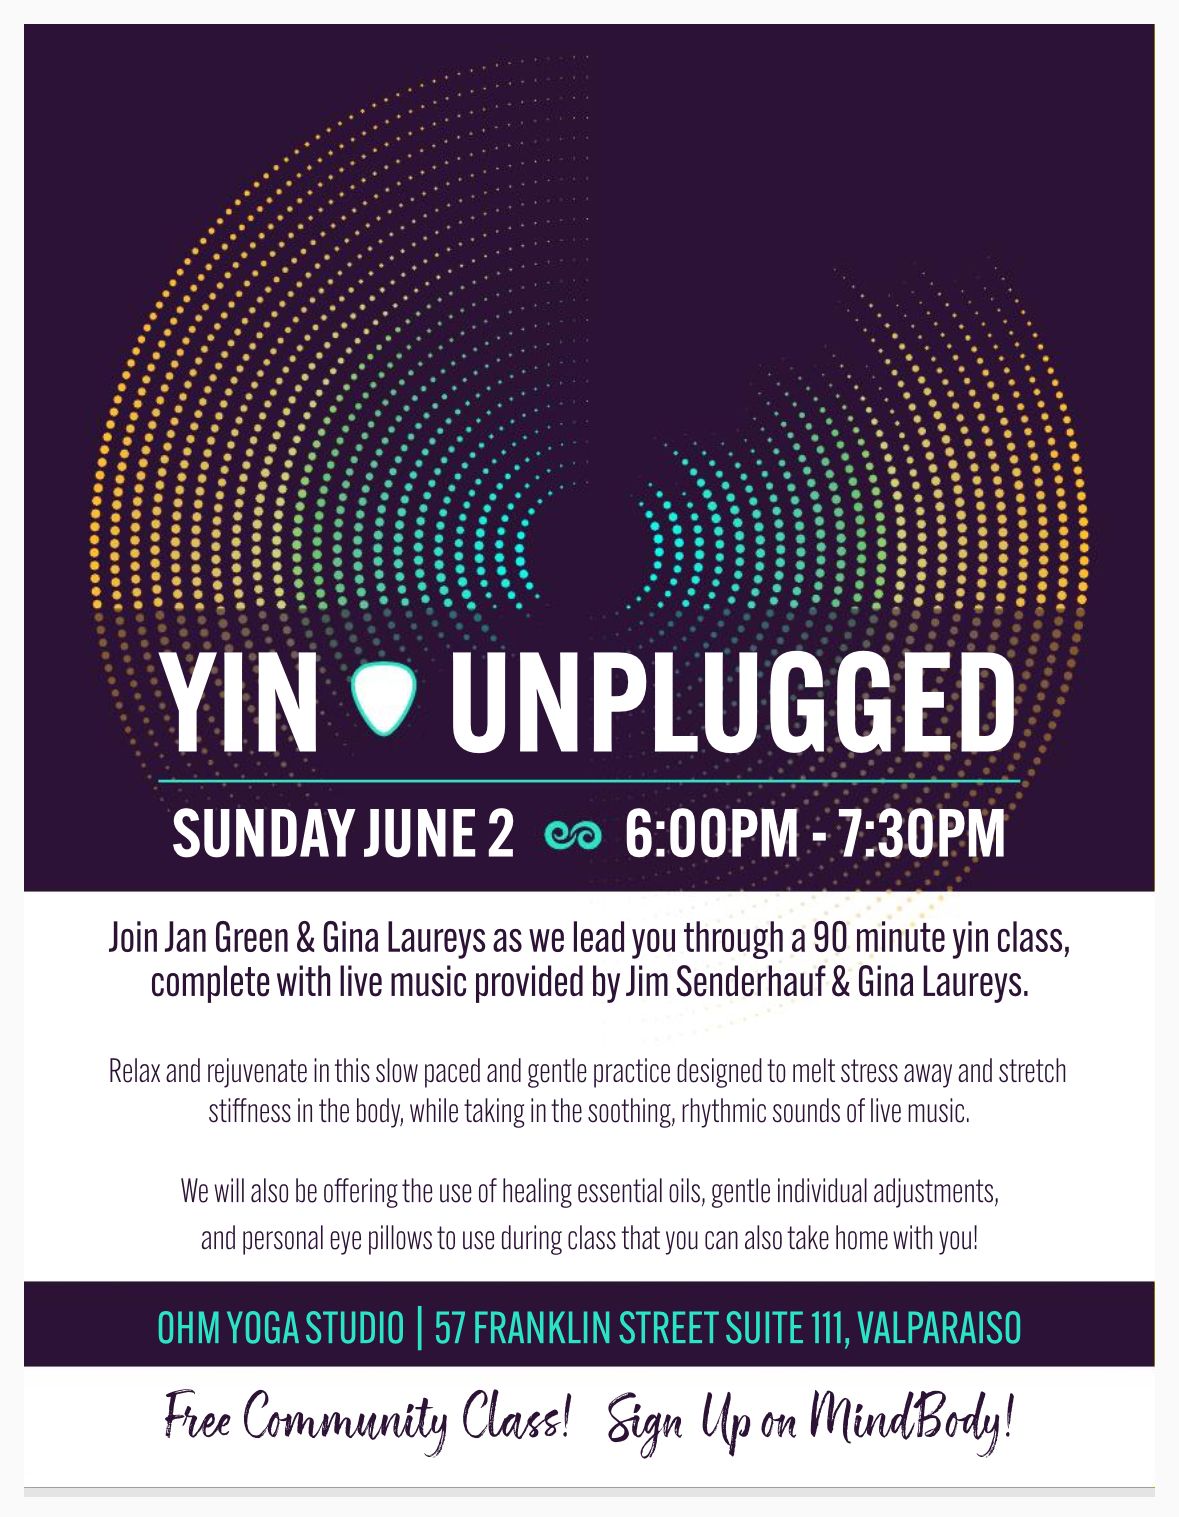 Yin Unplugged